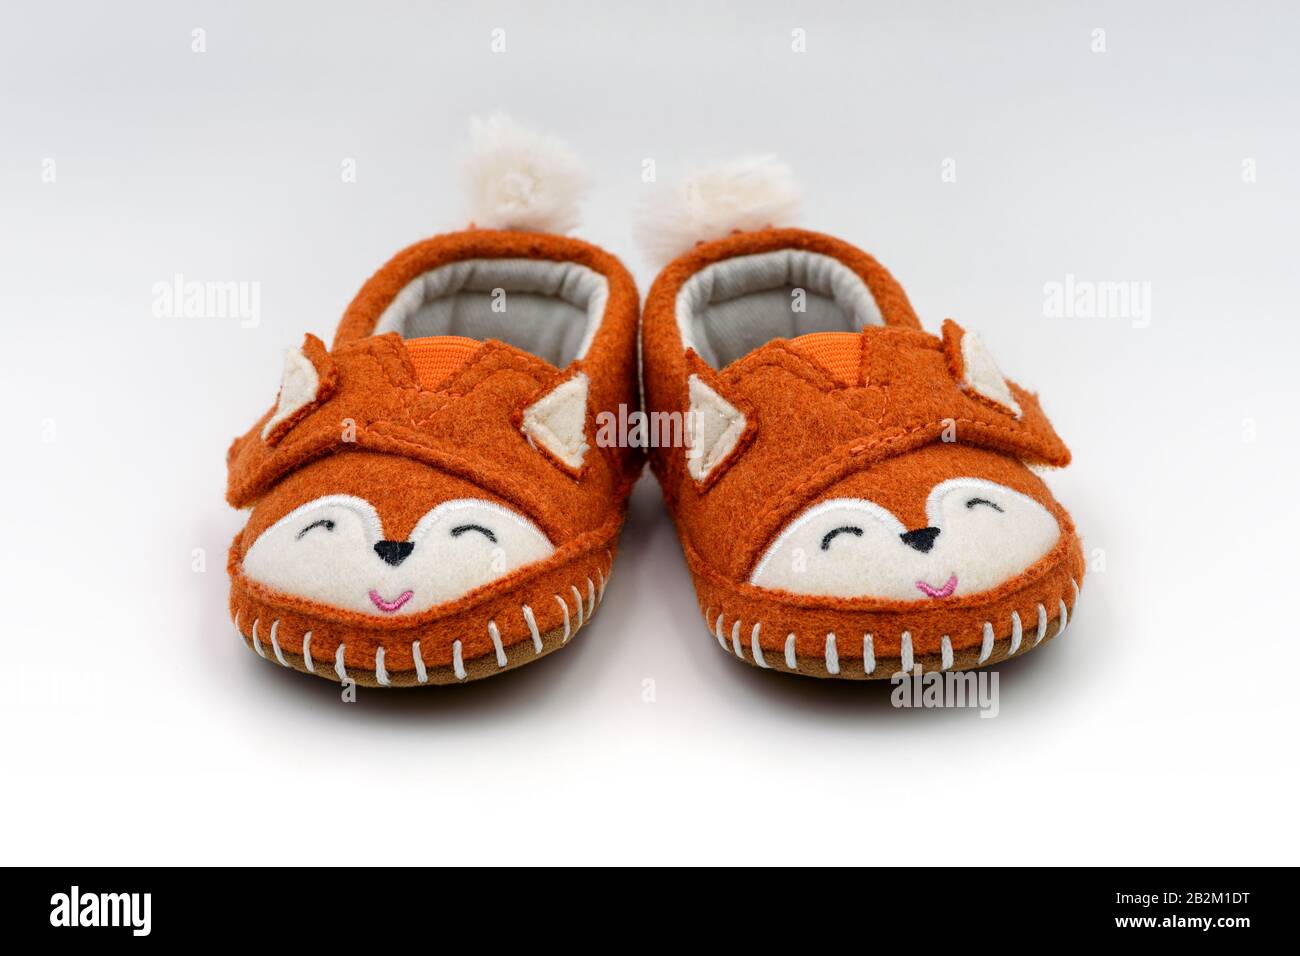 Cute orange fox shaped baby slippers isolated on white background. Stock Photo